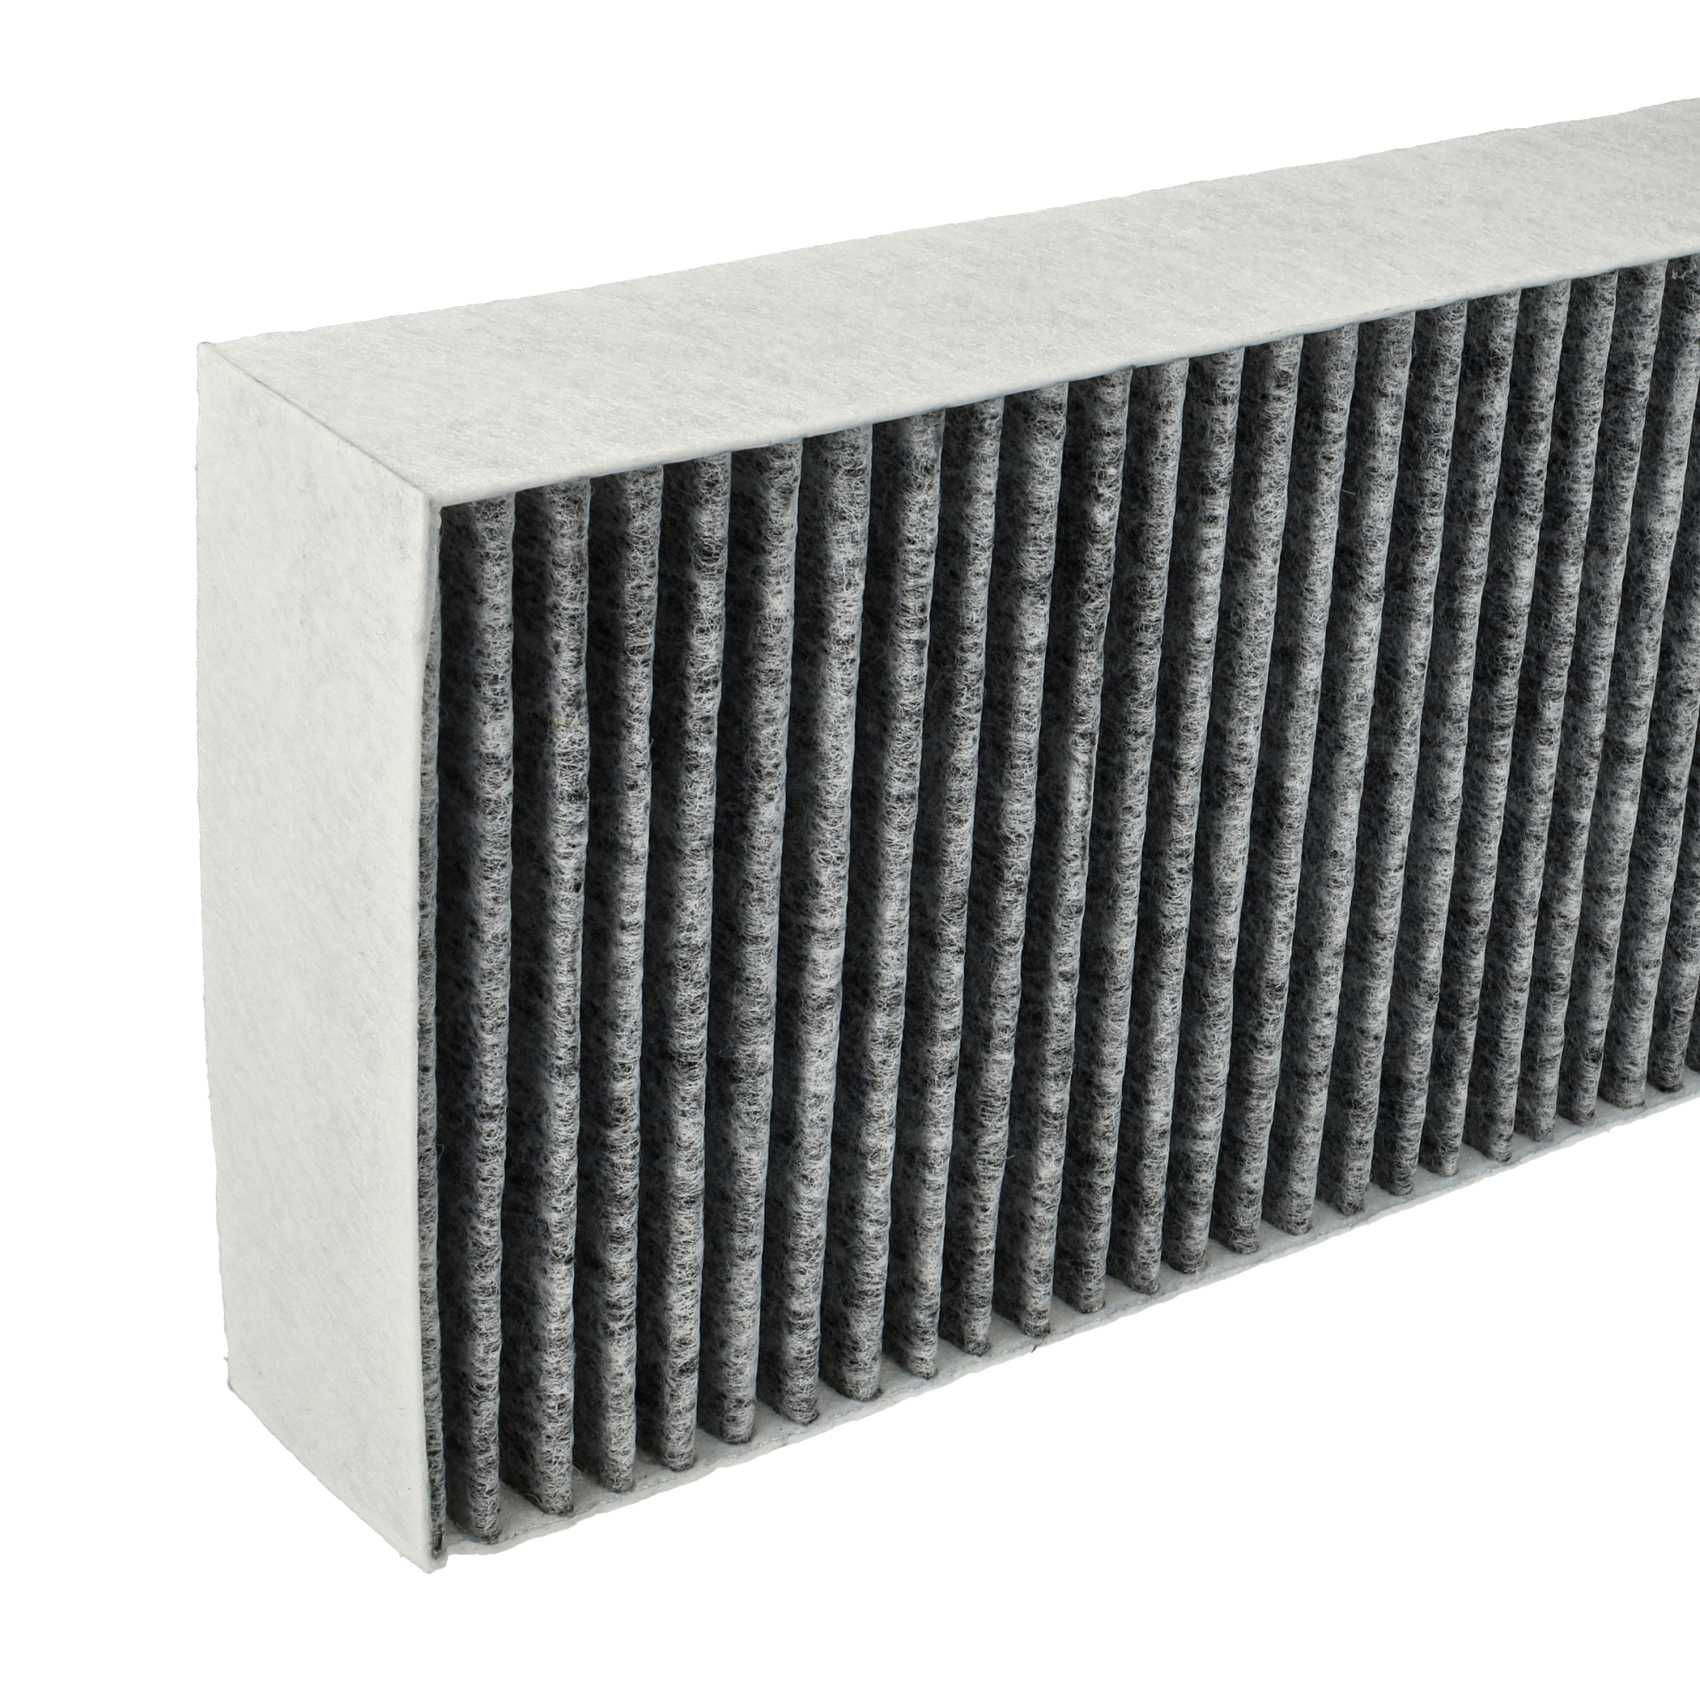 2x Filtro carboni attivi sostituisce Bora BAKFS, BAKFS-002 per cappe Bora - 34 x 12,2 x 4,25 cm